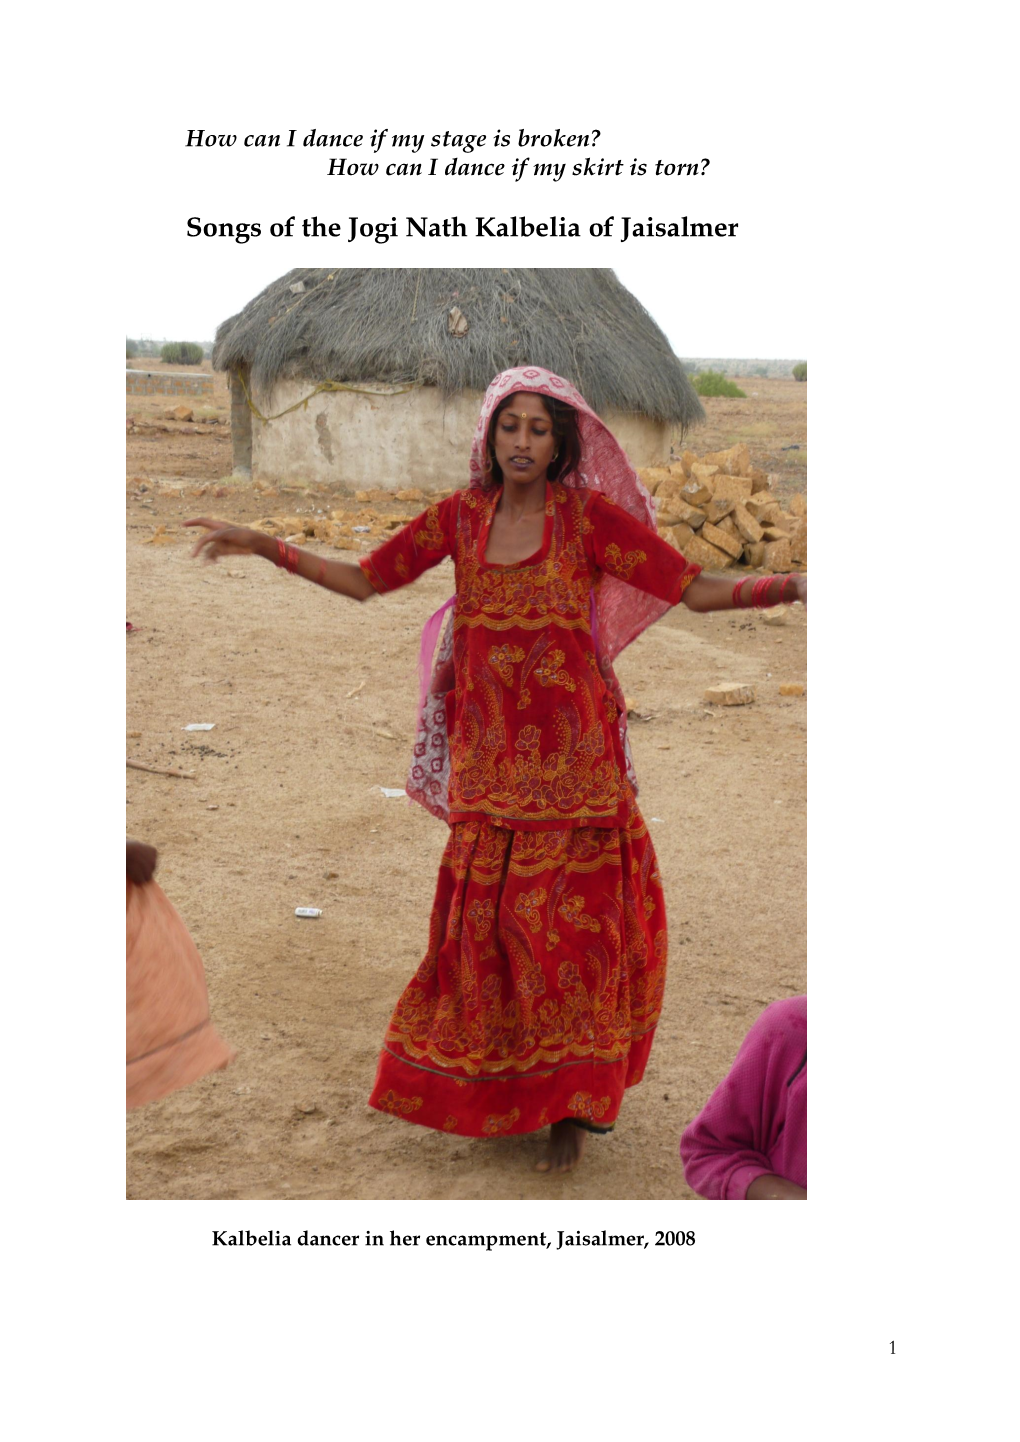 Songs of the Jogi Nath Kalbelia of Jaisalmer